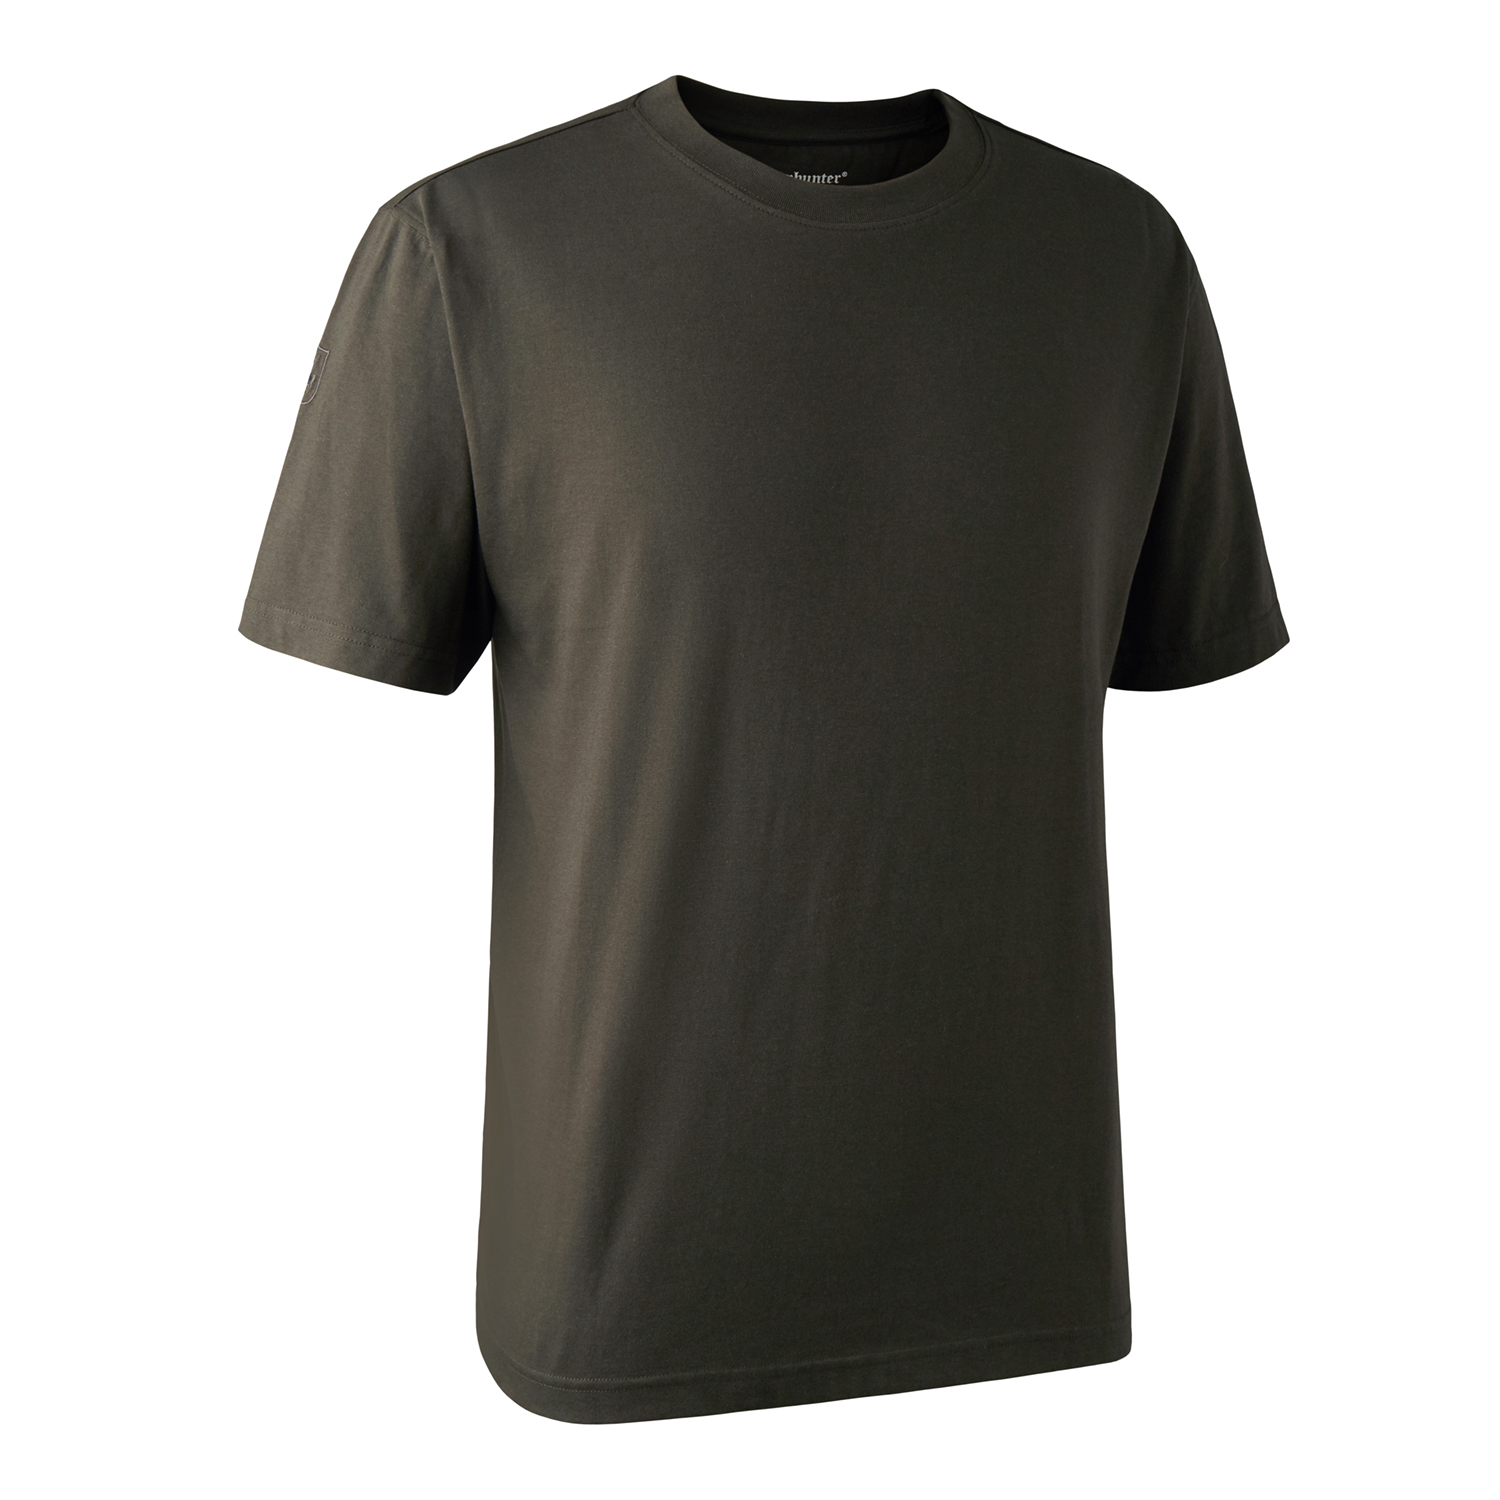 Swindon T-Shirt - Bark Green - L thumbnail